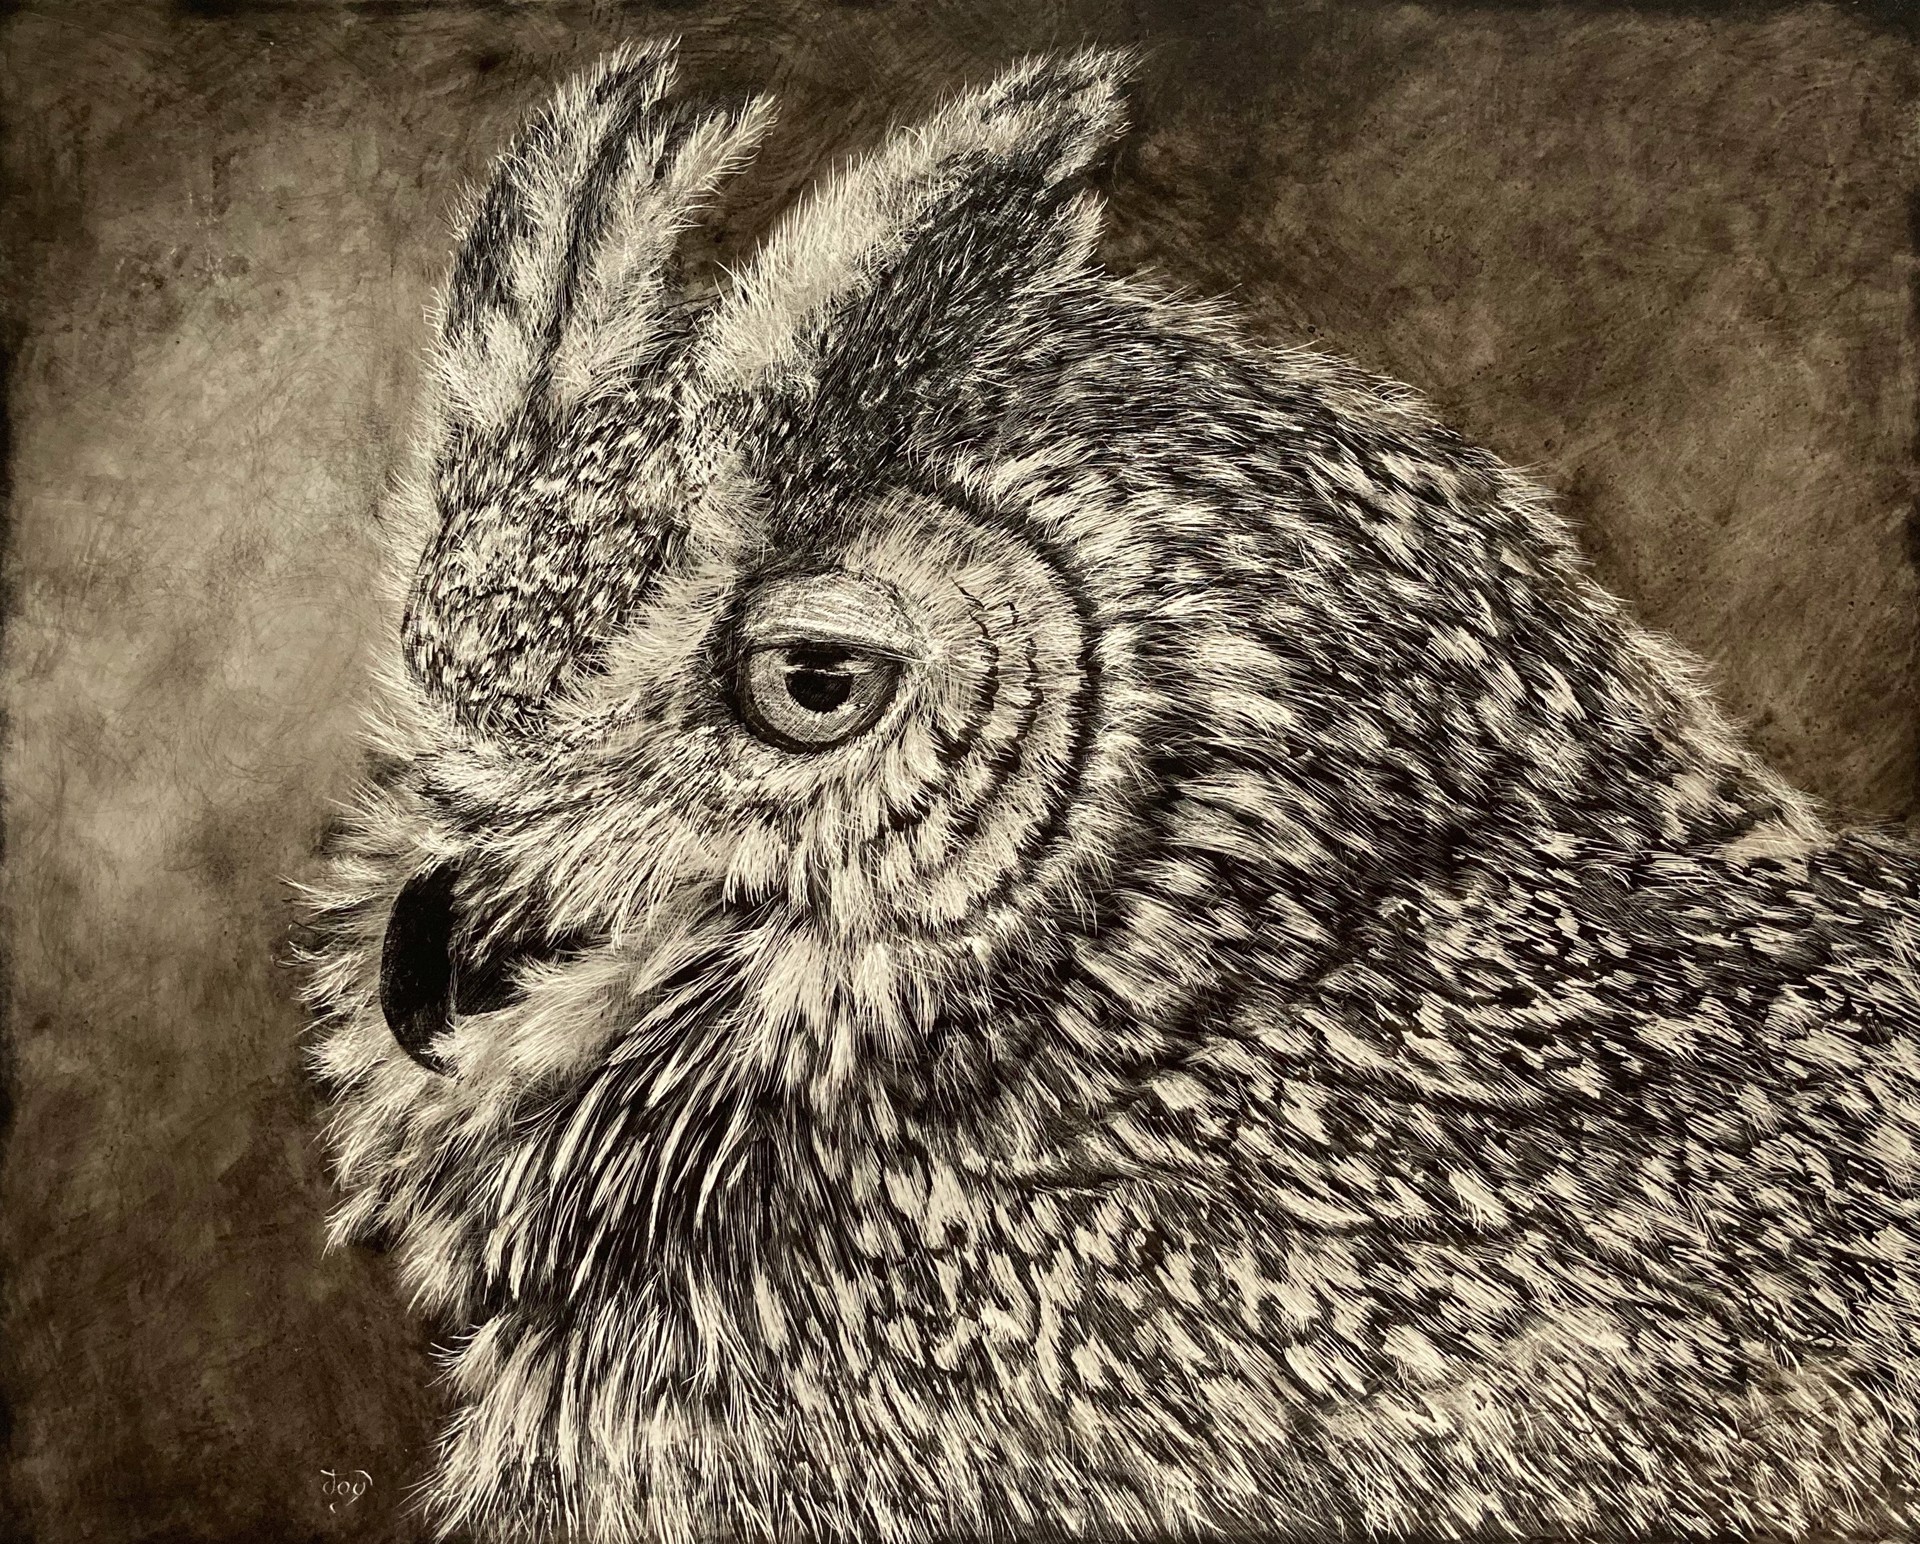 Juvenile Great Horned Owl by Joy McCallister